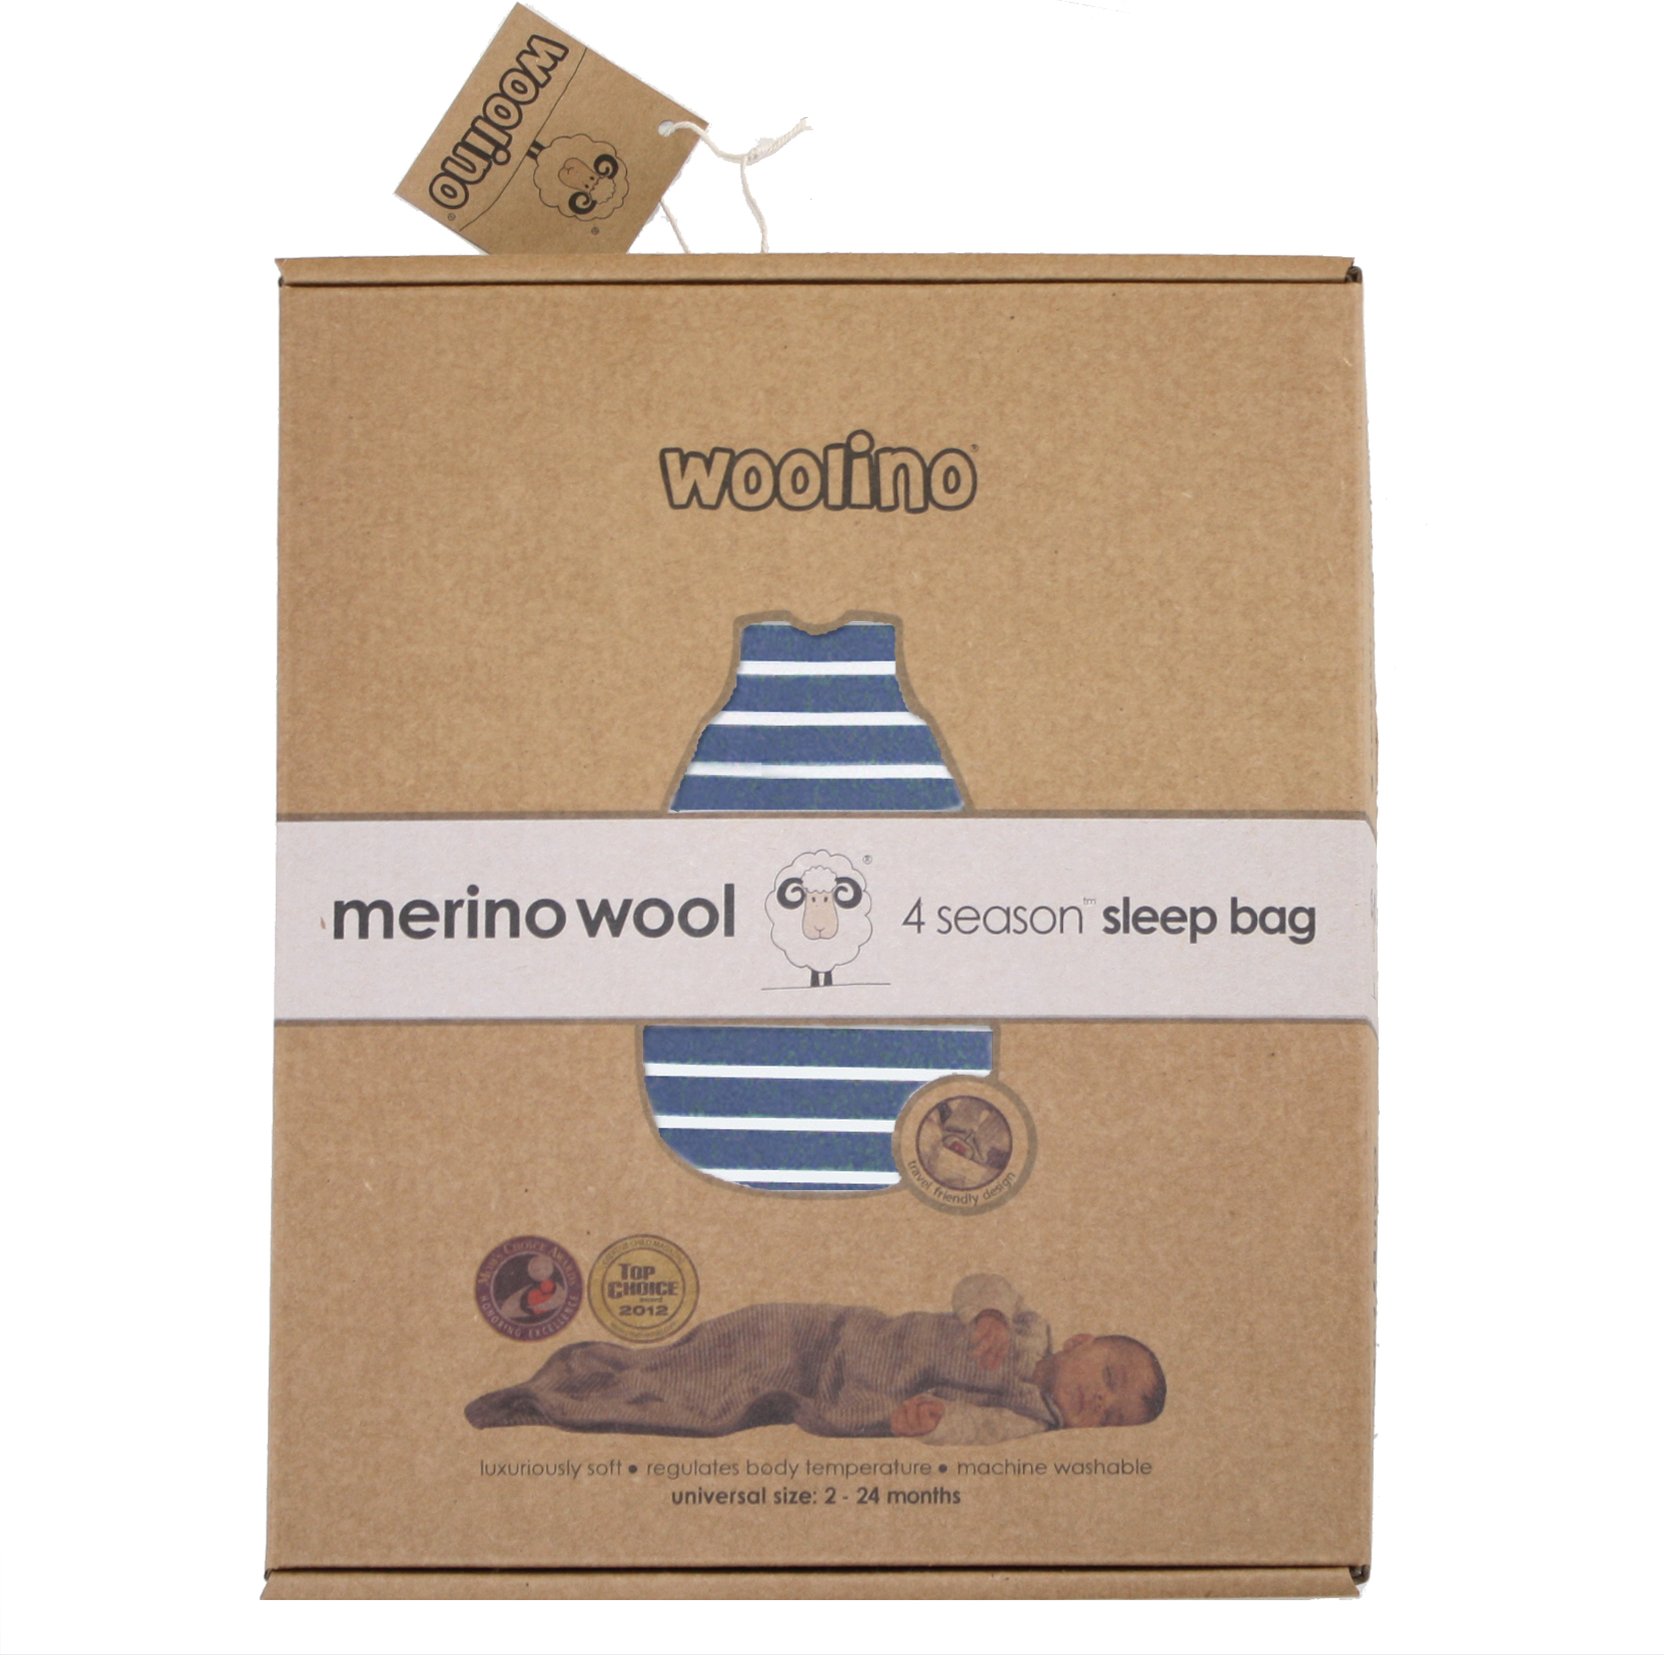 Baby Sleeping Bag from Woolino - 4 Season - Merino Wool - 2 Months - 2 Years - Navy Blue